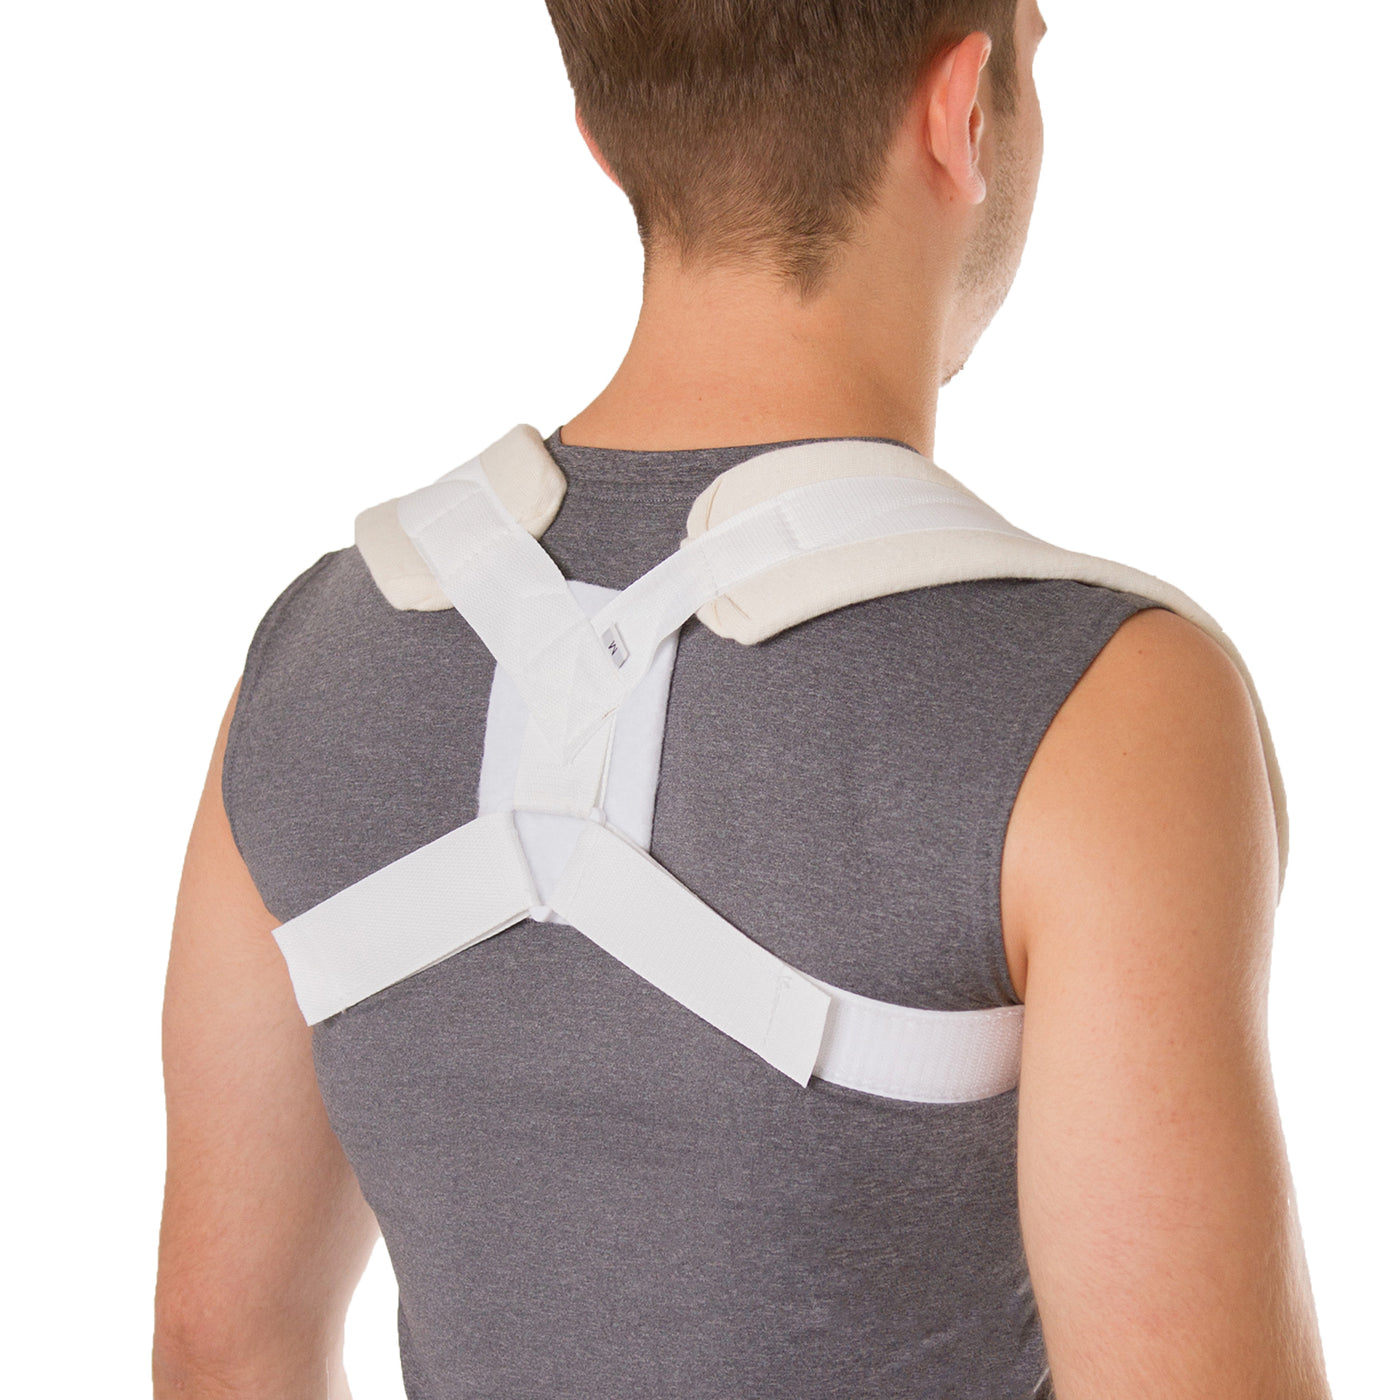 Wholesale shoulder chest support belt For Posture and Back Pain 